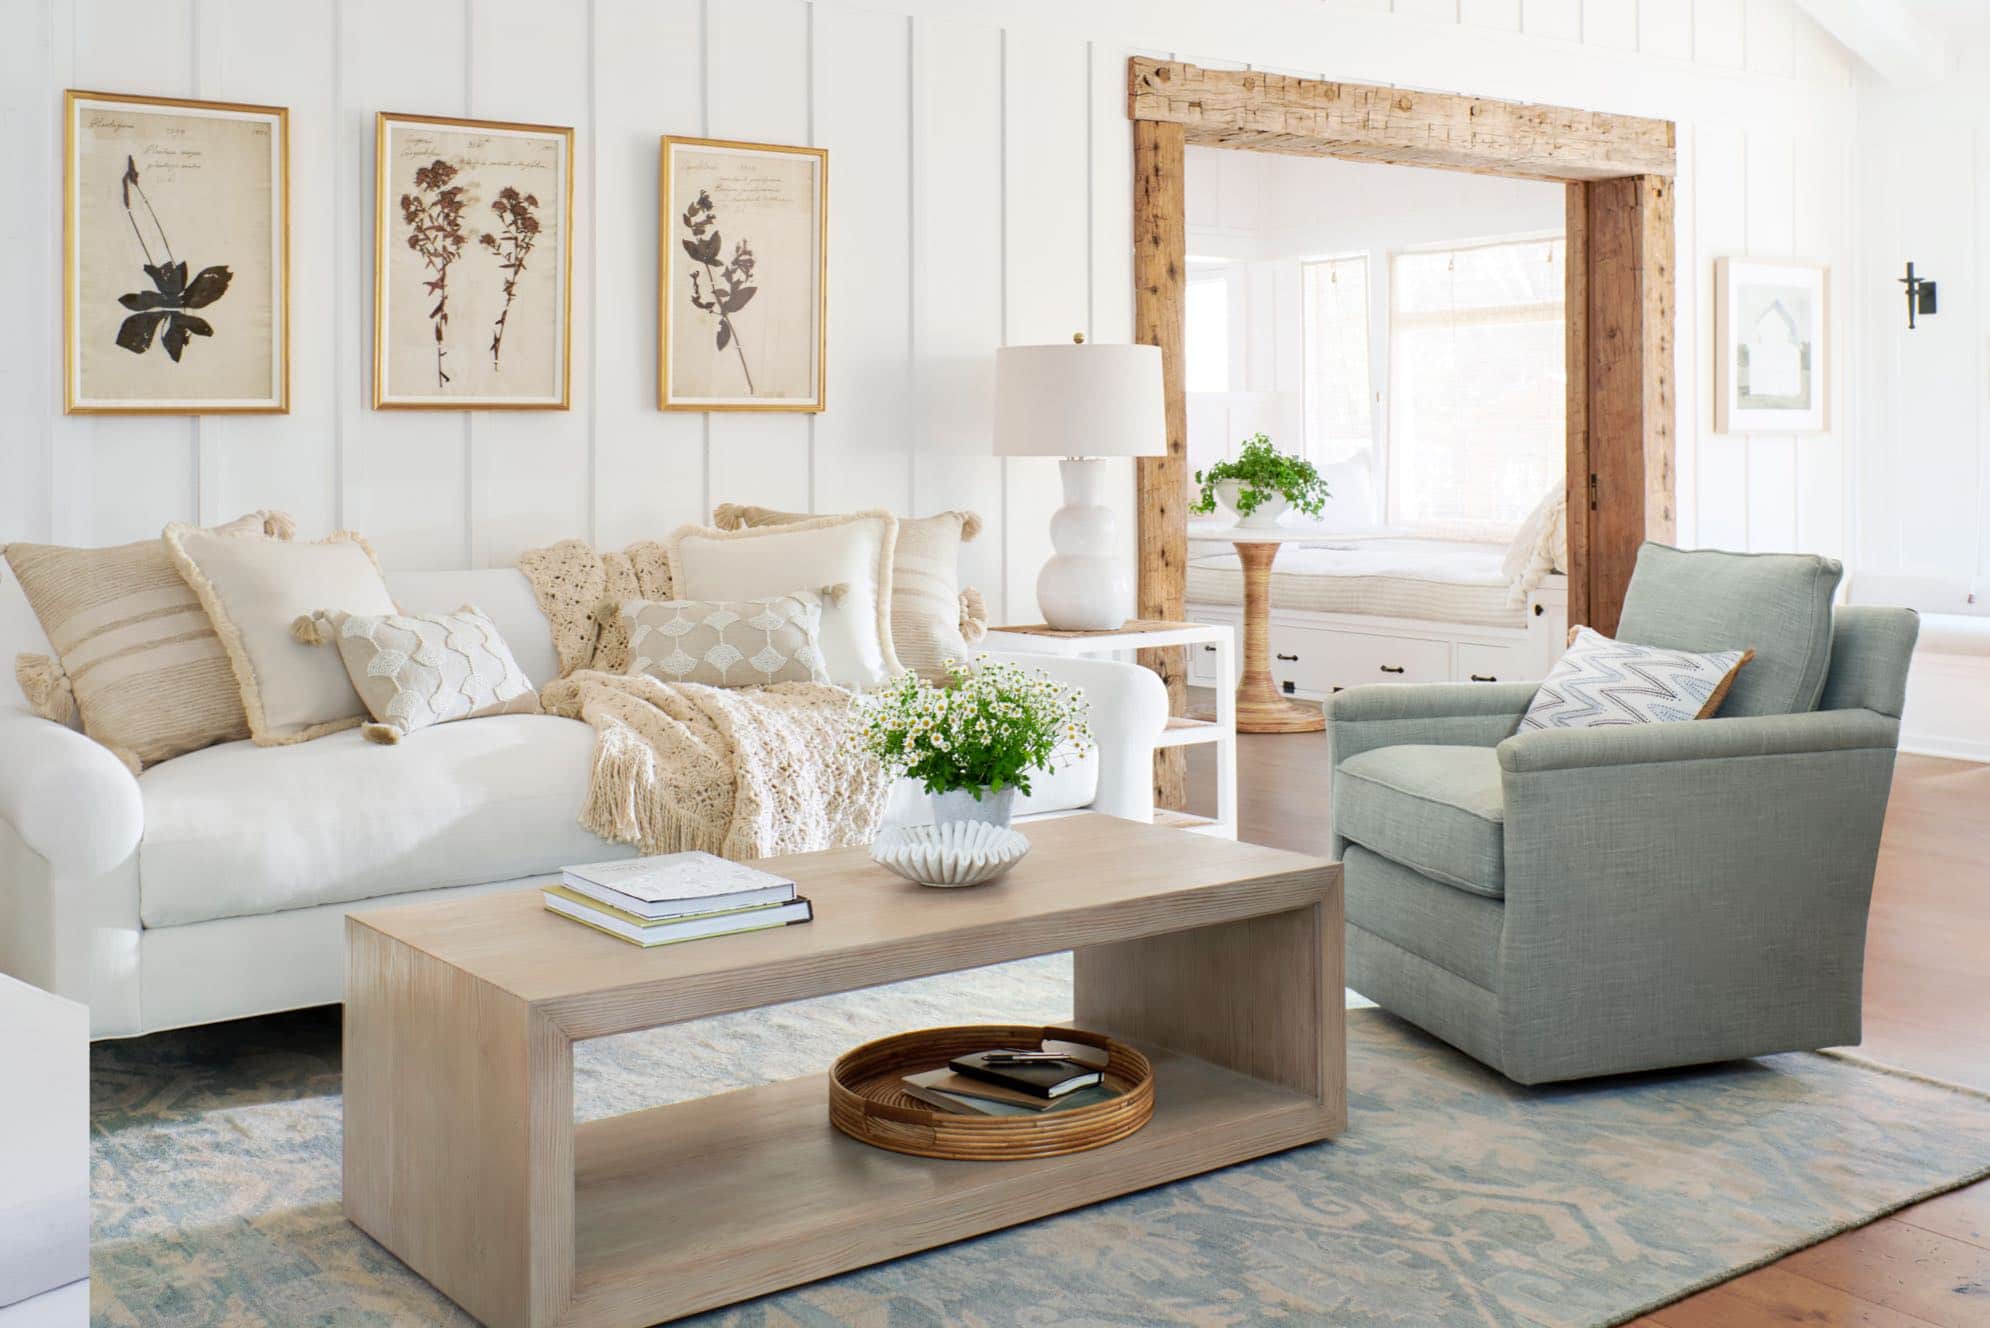 Serena & Lily living room remodel